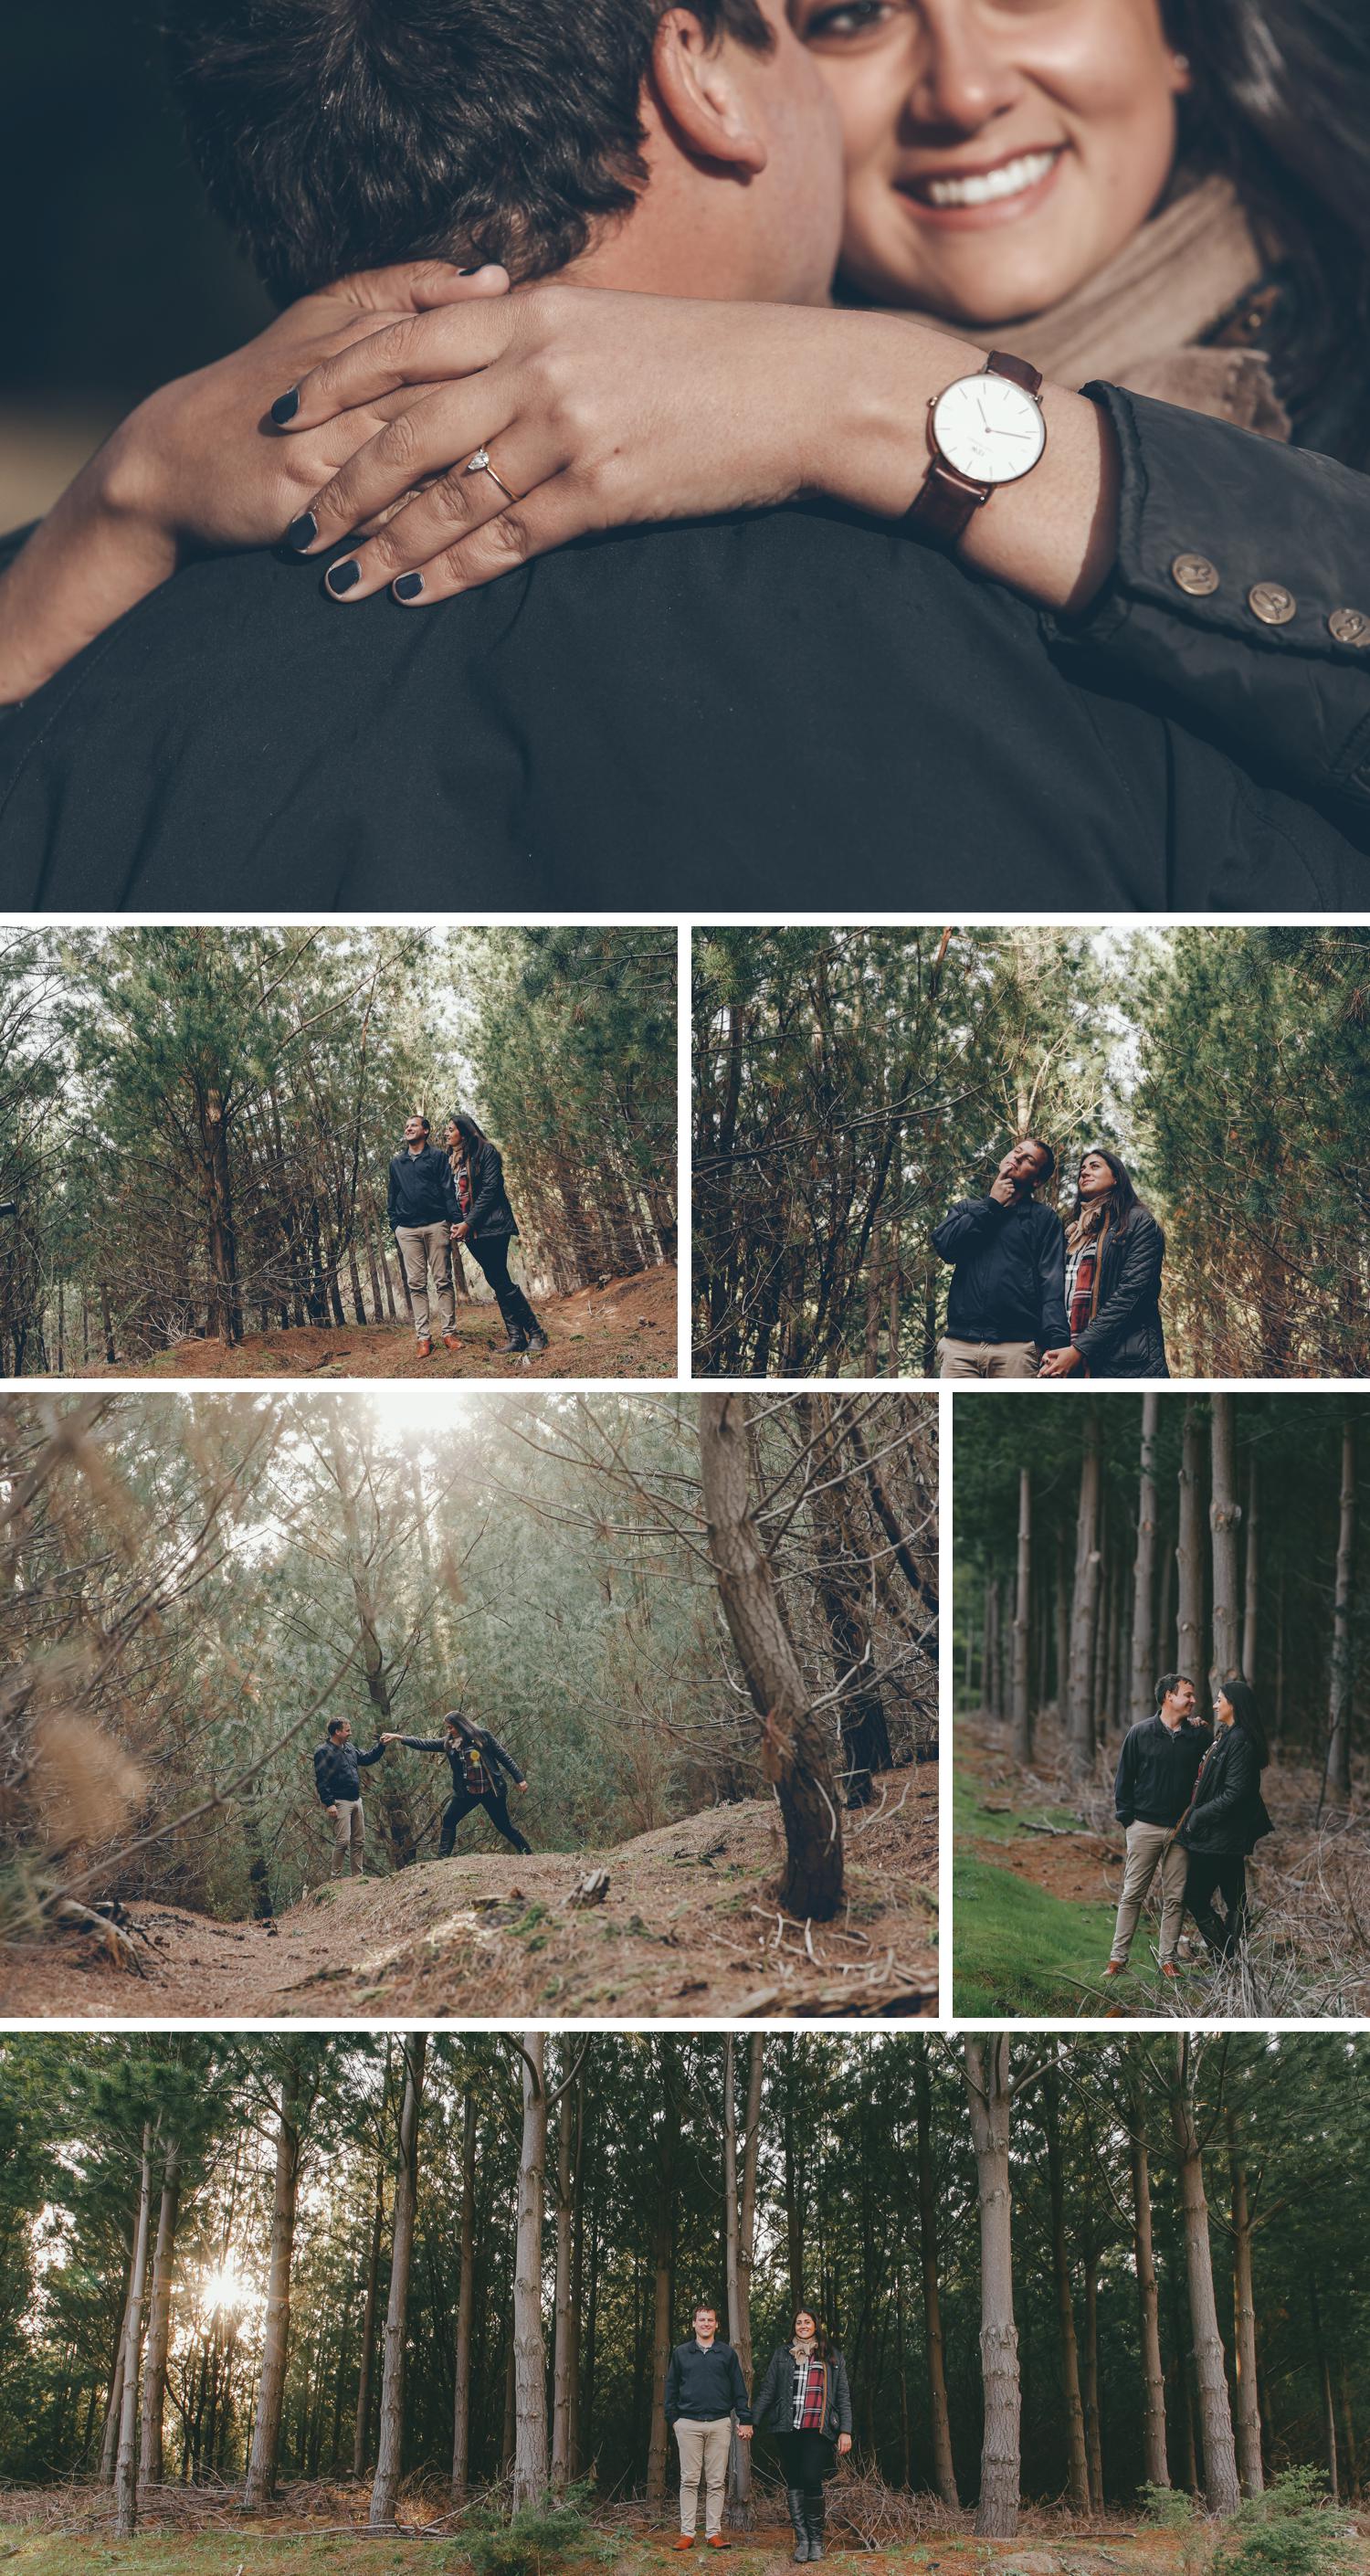 Pine Plantation, Engagement Shoot, Forrest Rain Photoshoot, Couple Embracing by Danae Studios